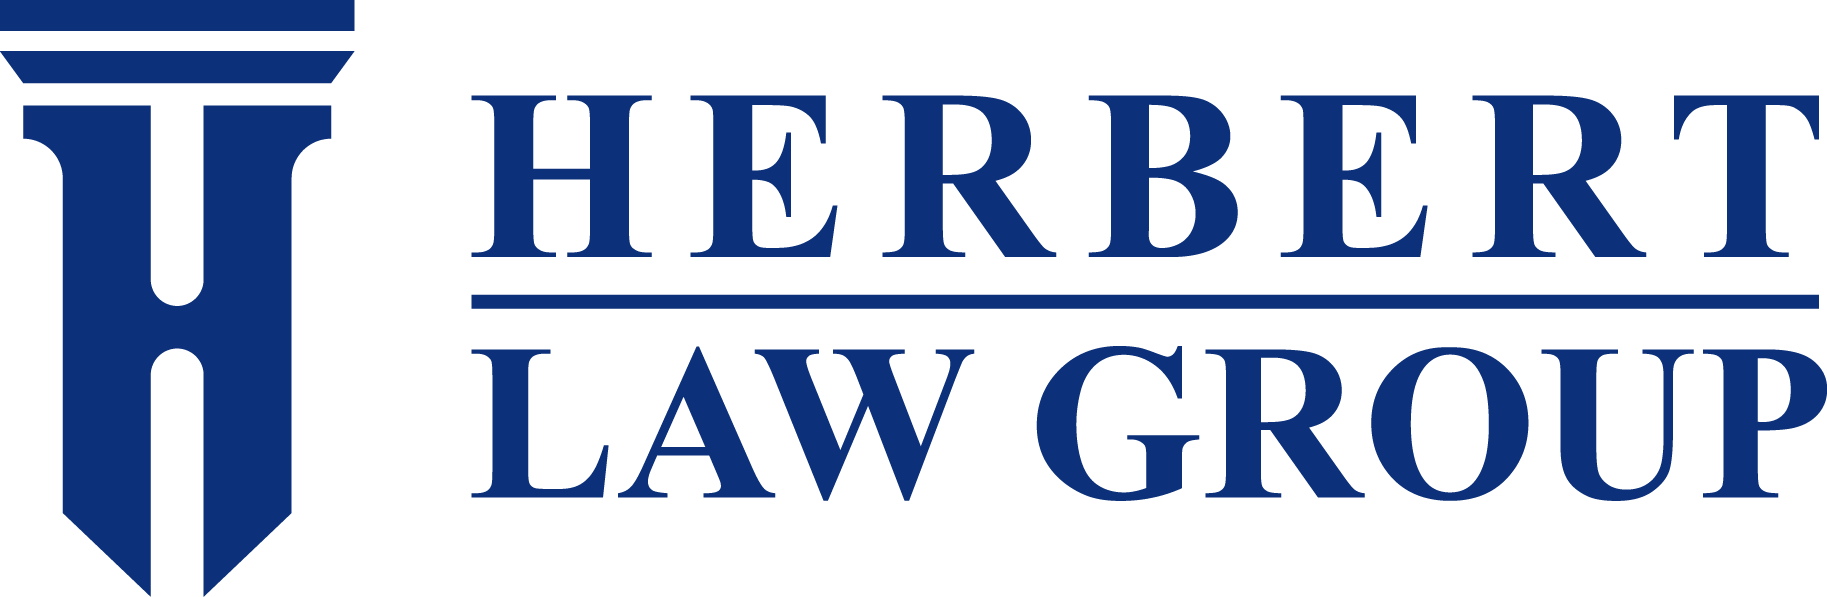 Herbert Law Group LLP